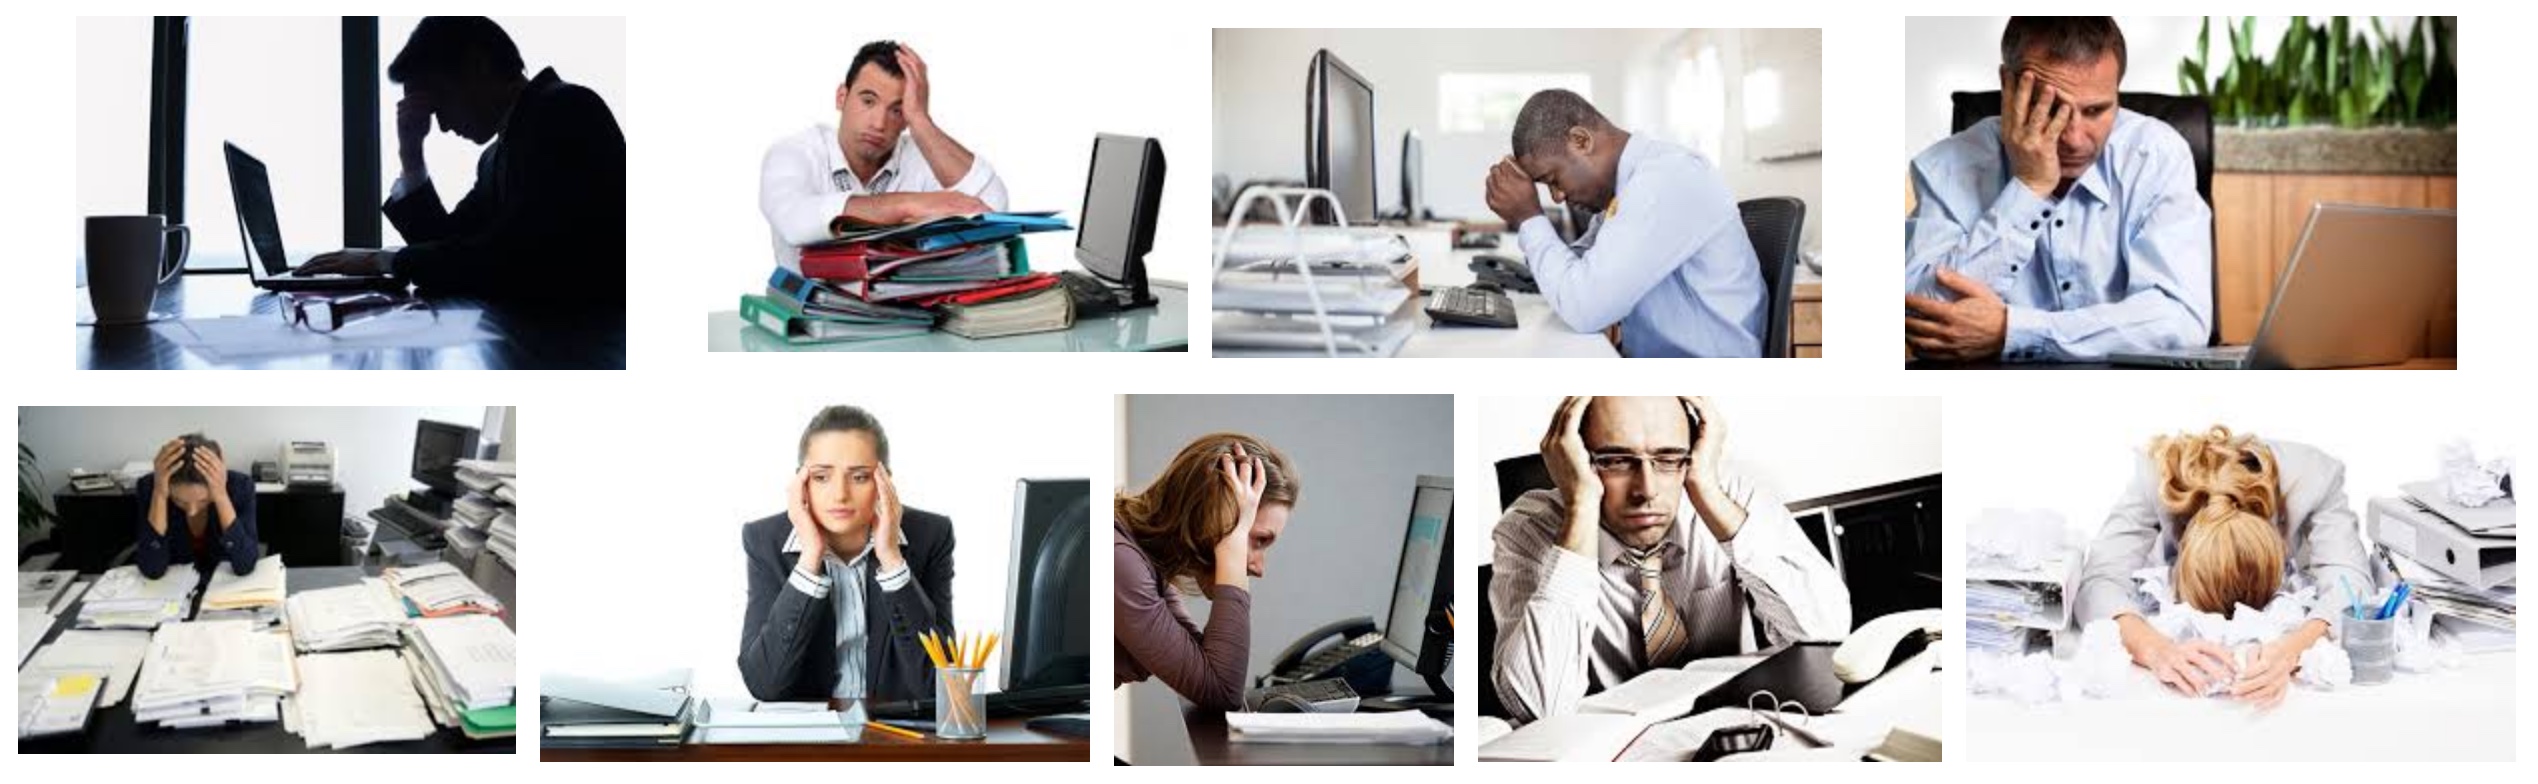 google-search-work-stress